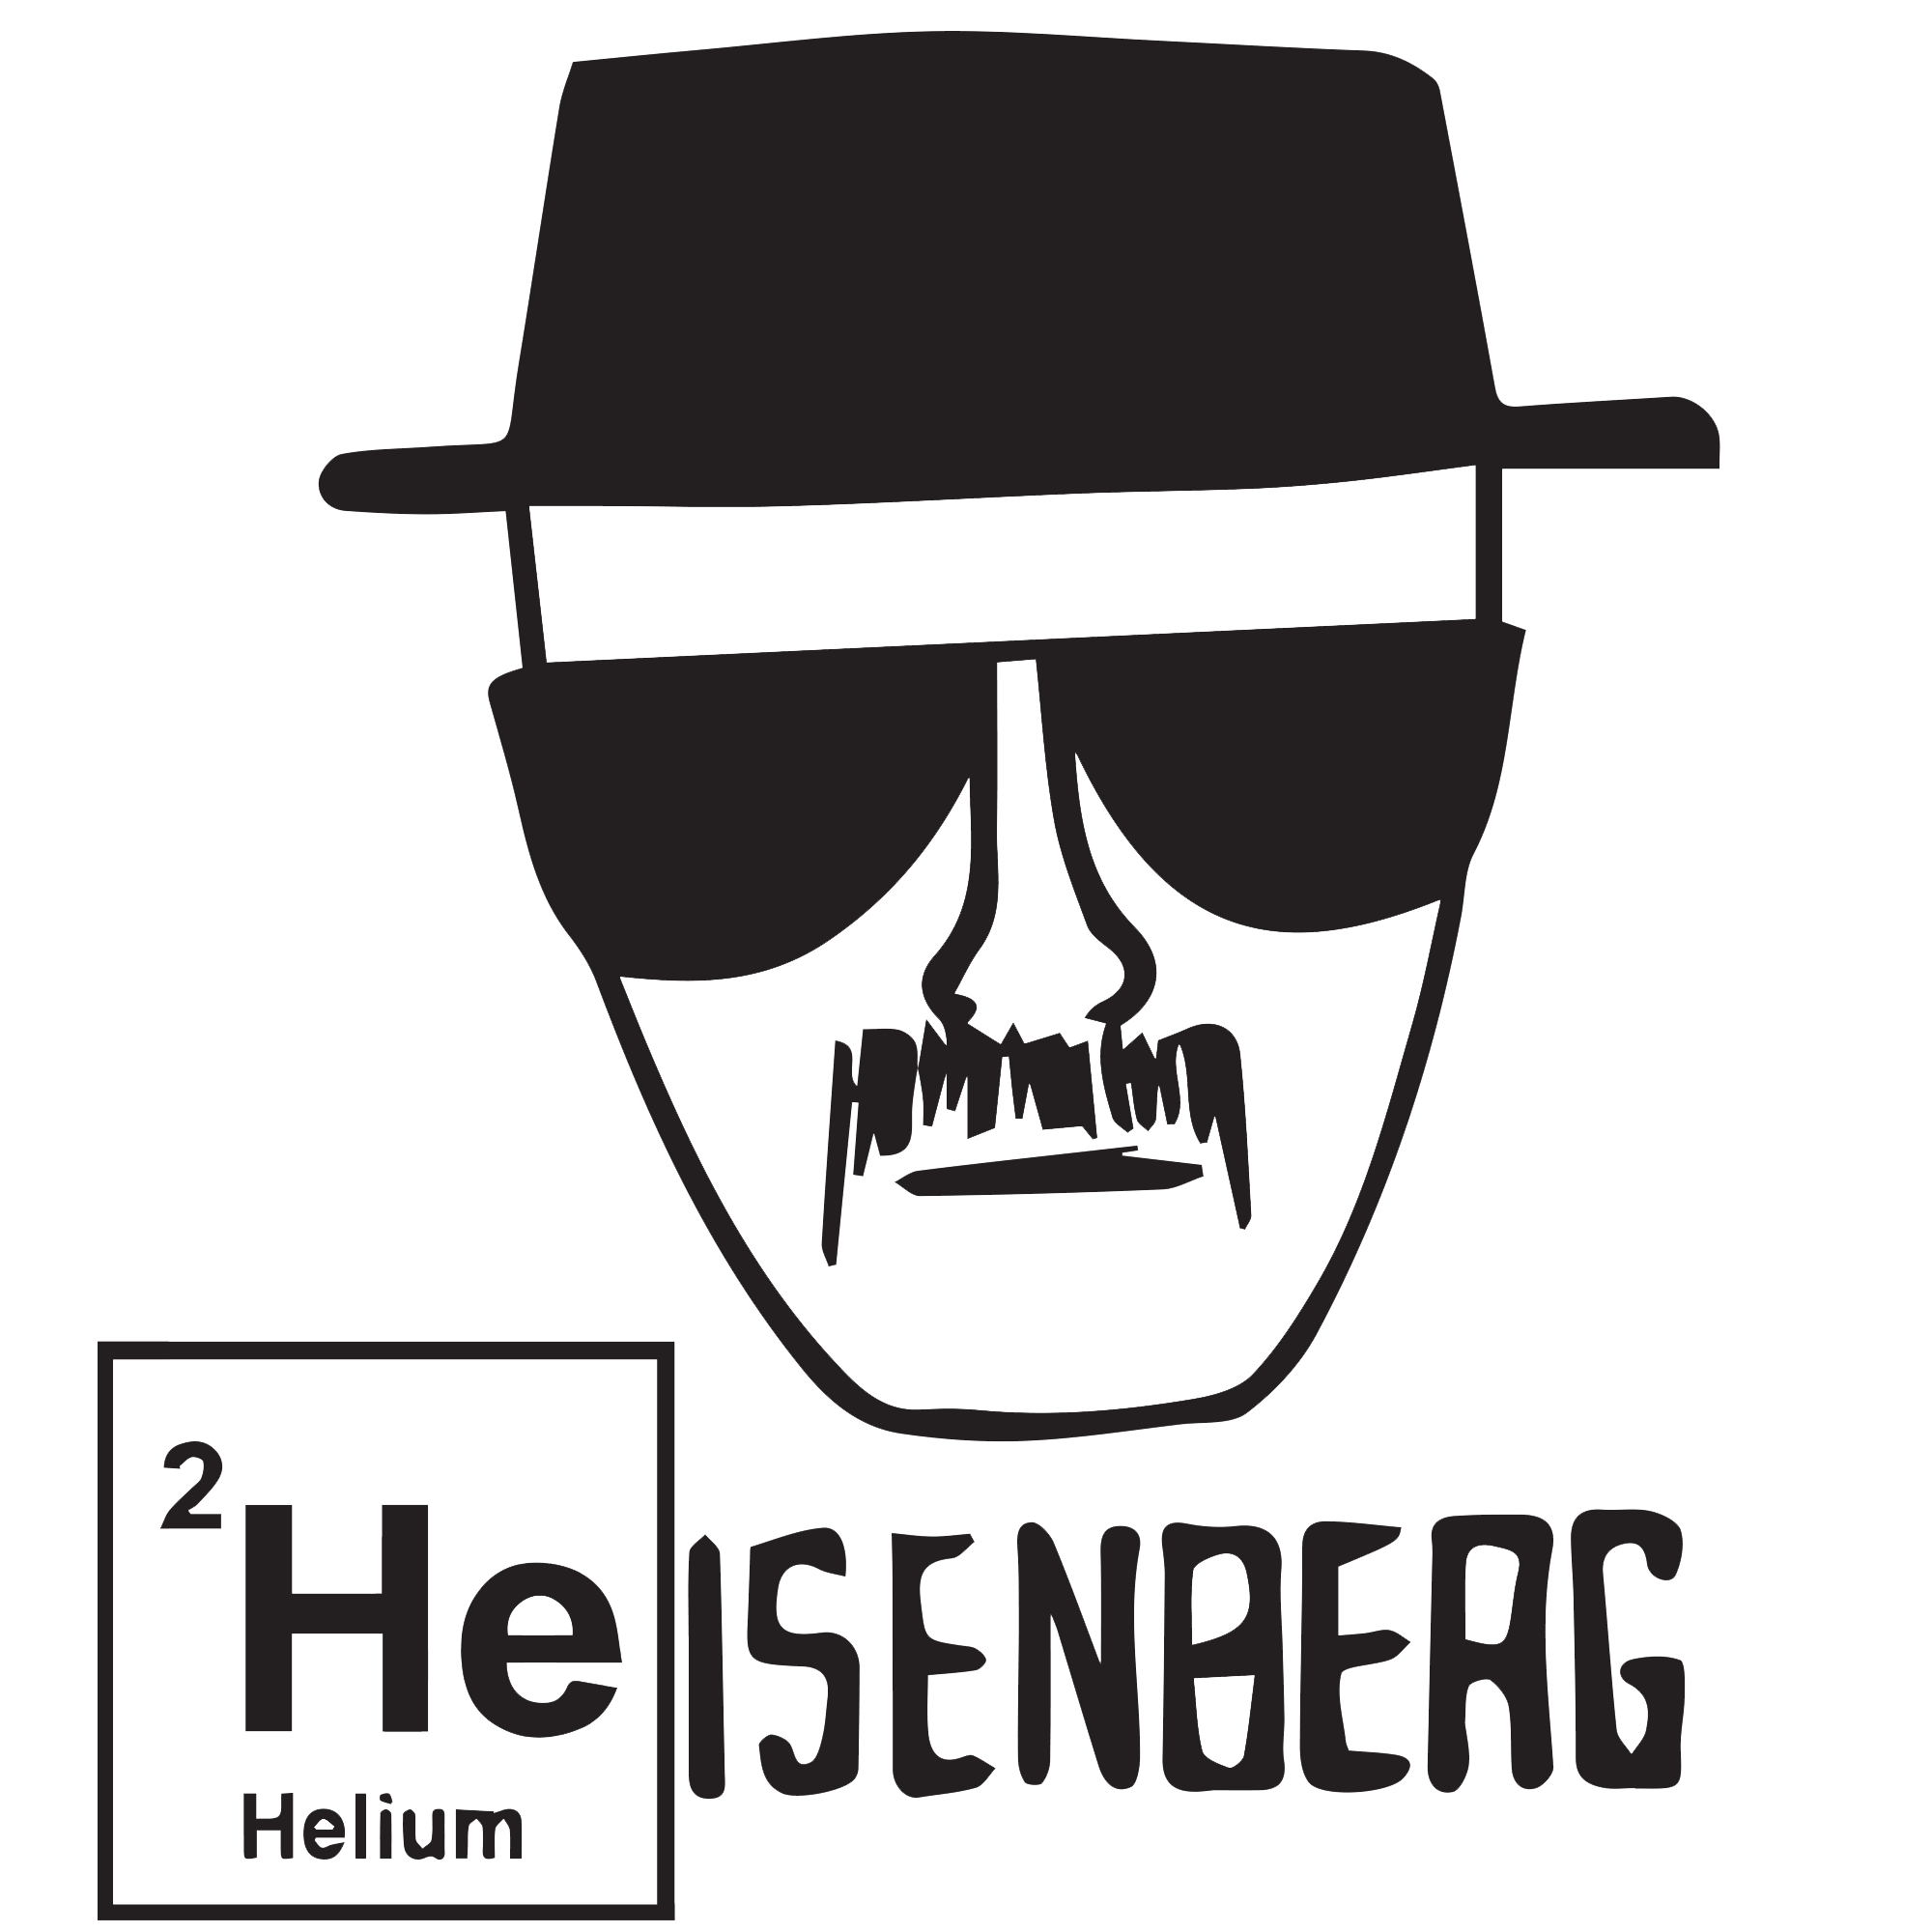 Original Heisenberg Sketch at Explore collection